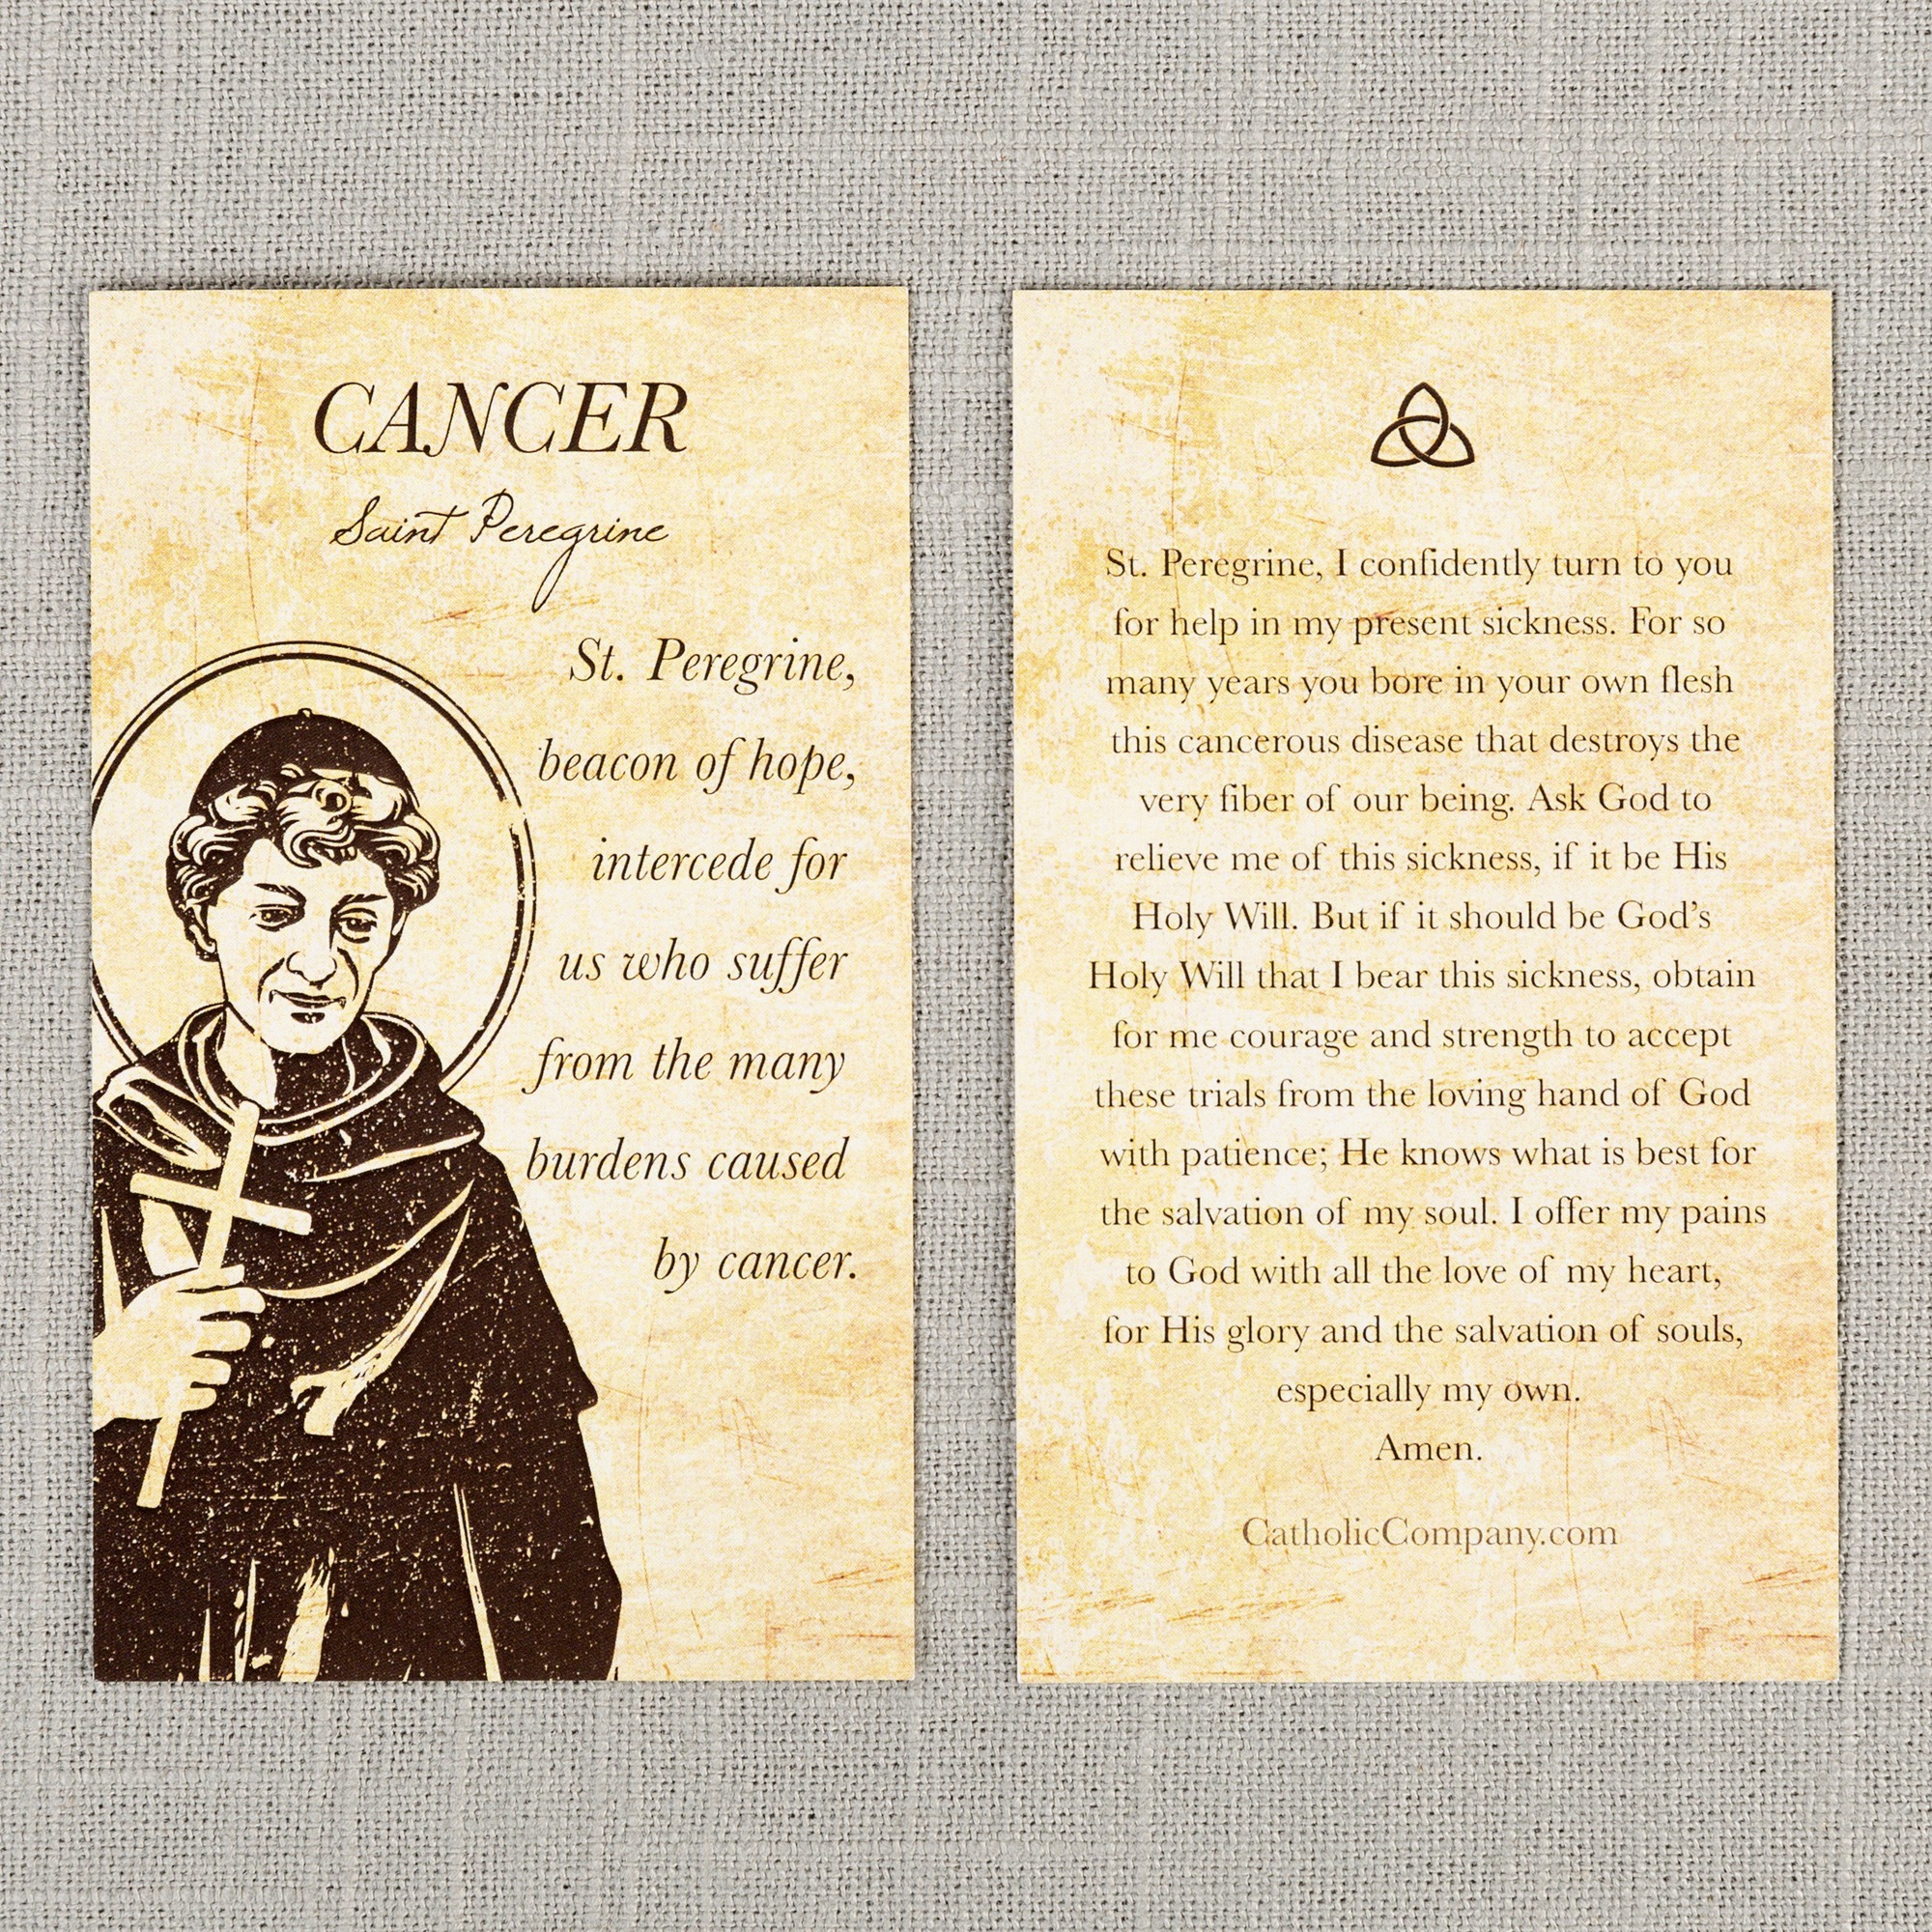 St. Peregrine Cancer Healing Prayer Card The Catholic Company®